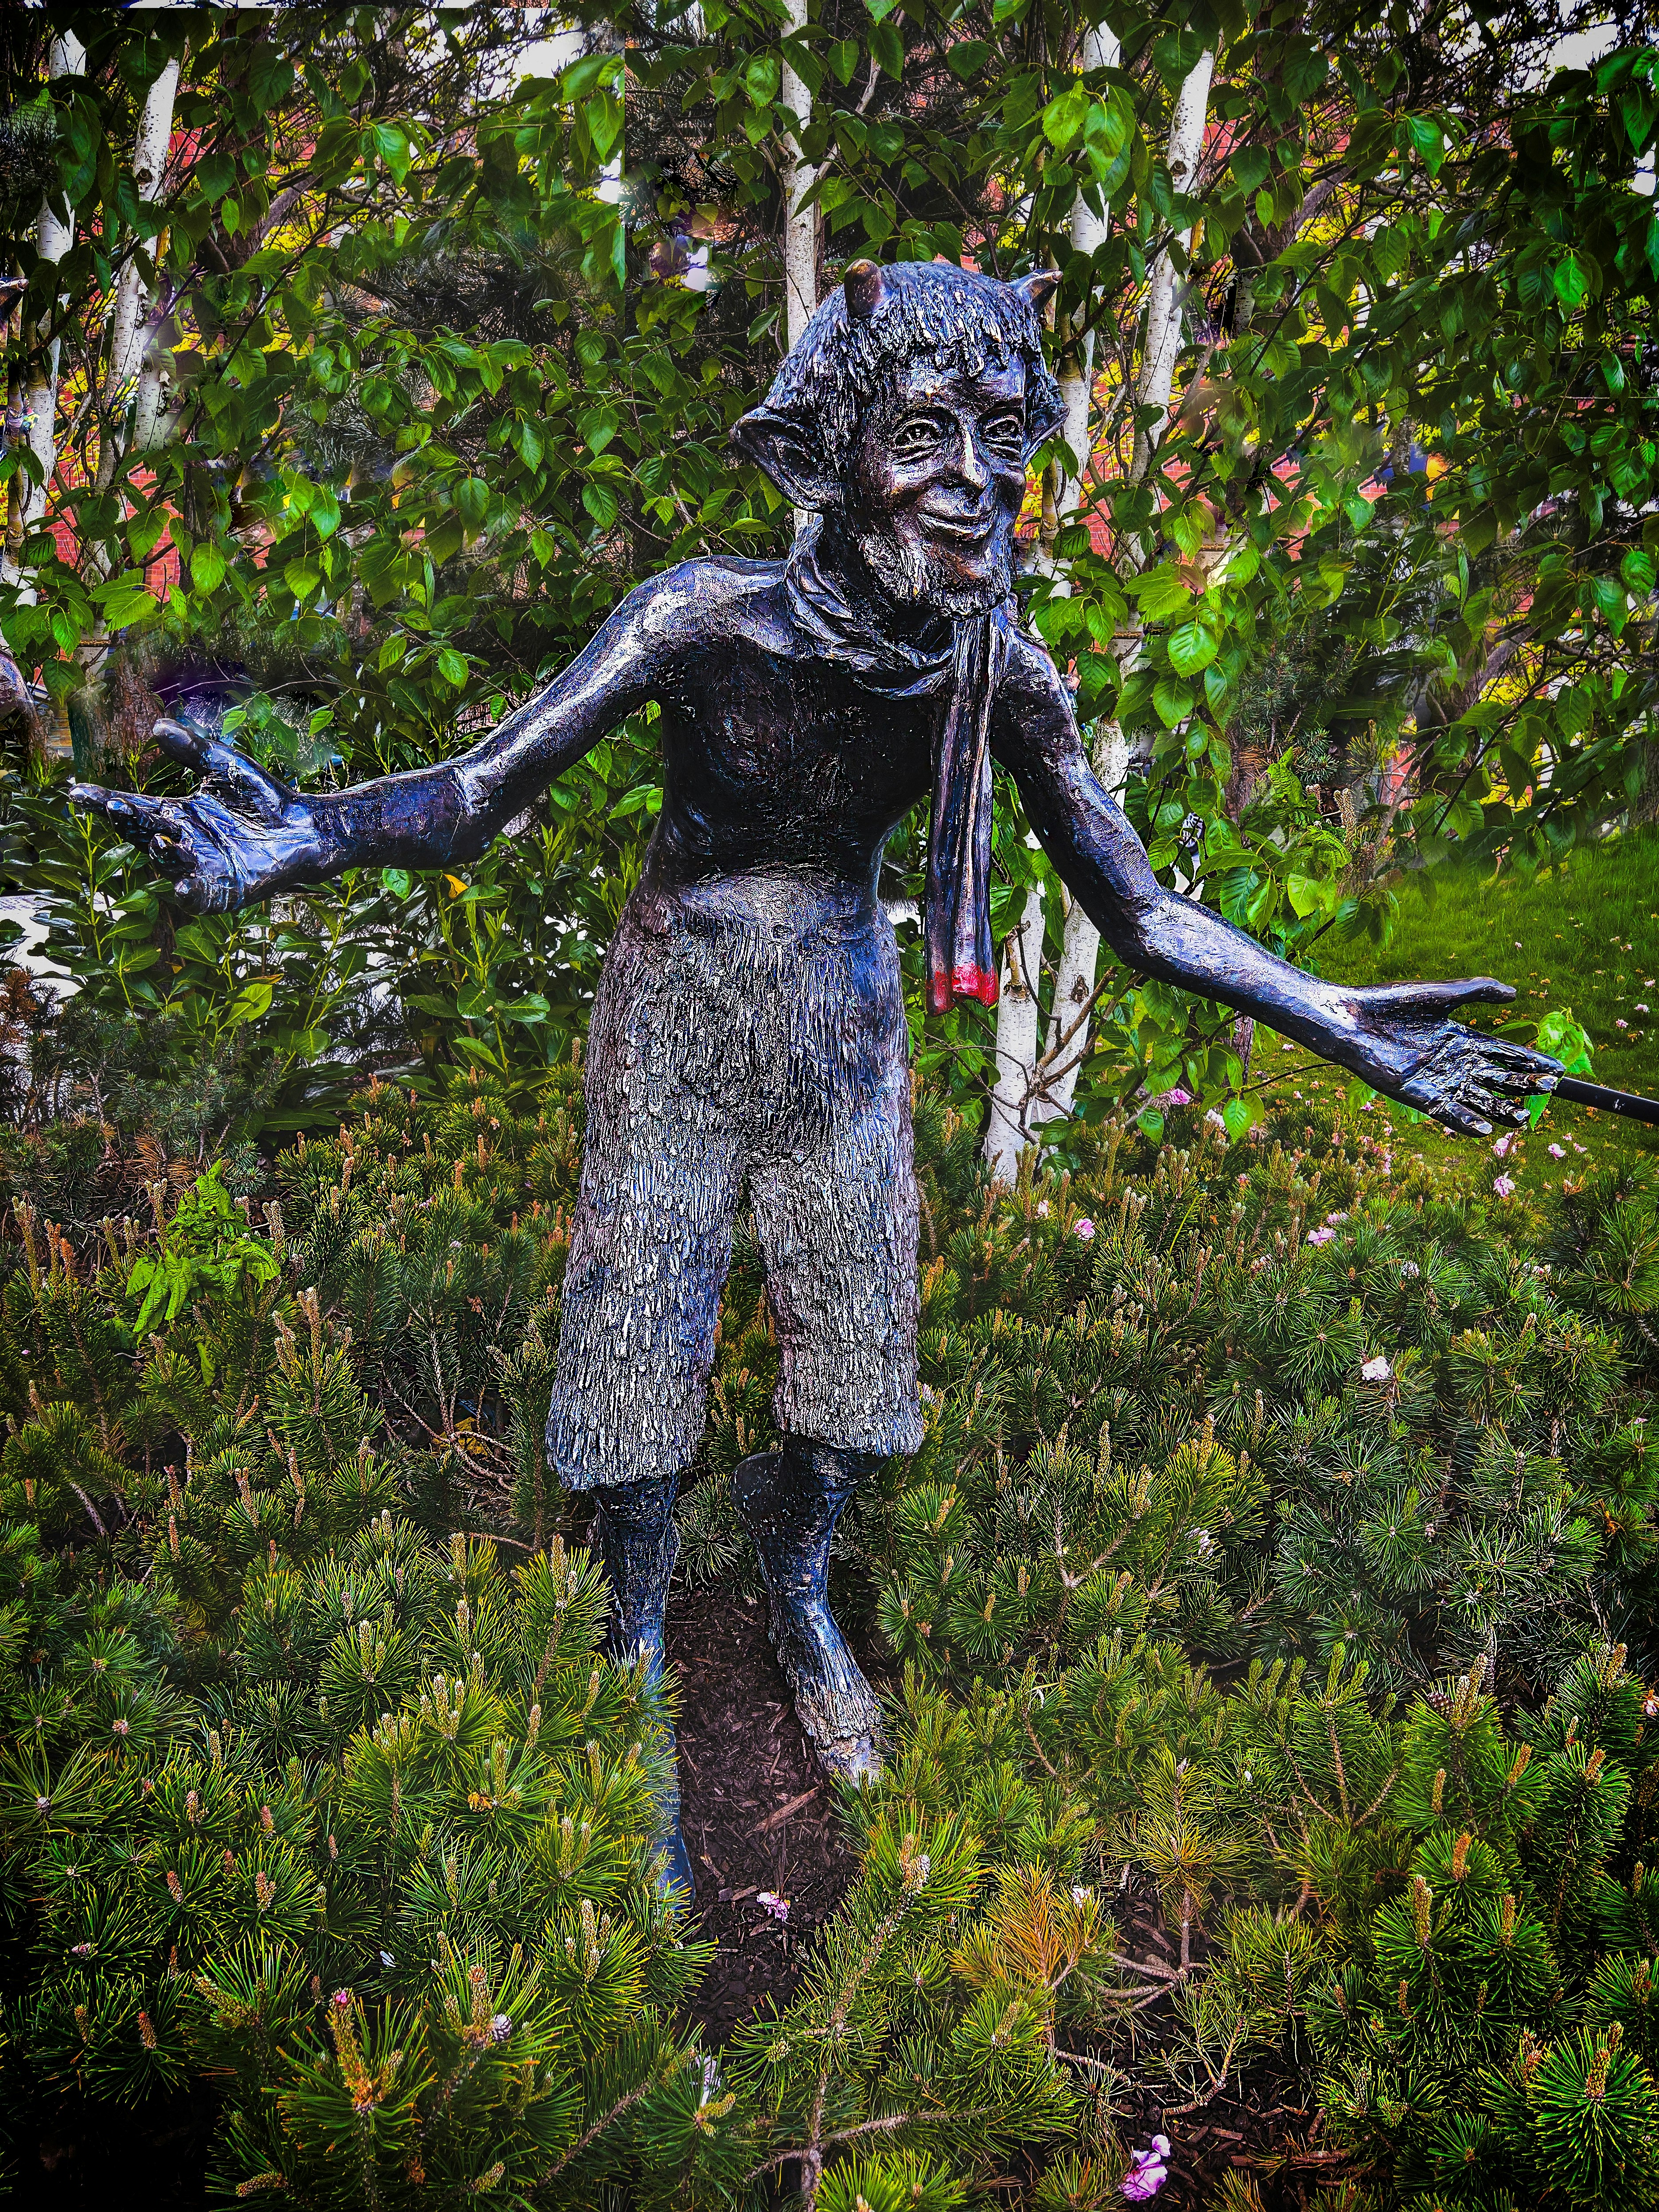 animal man creature statue near trees